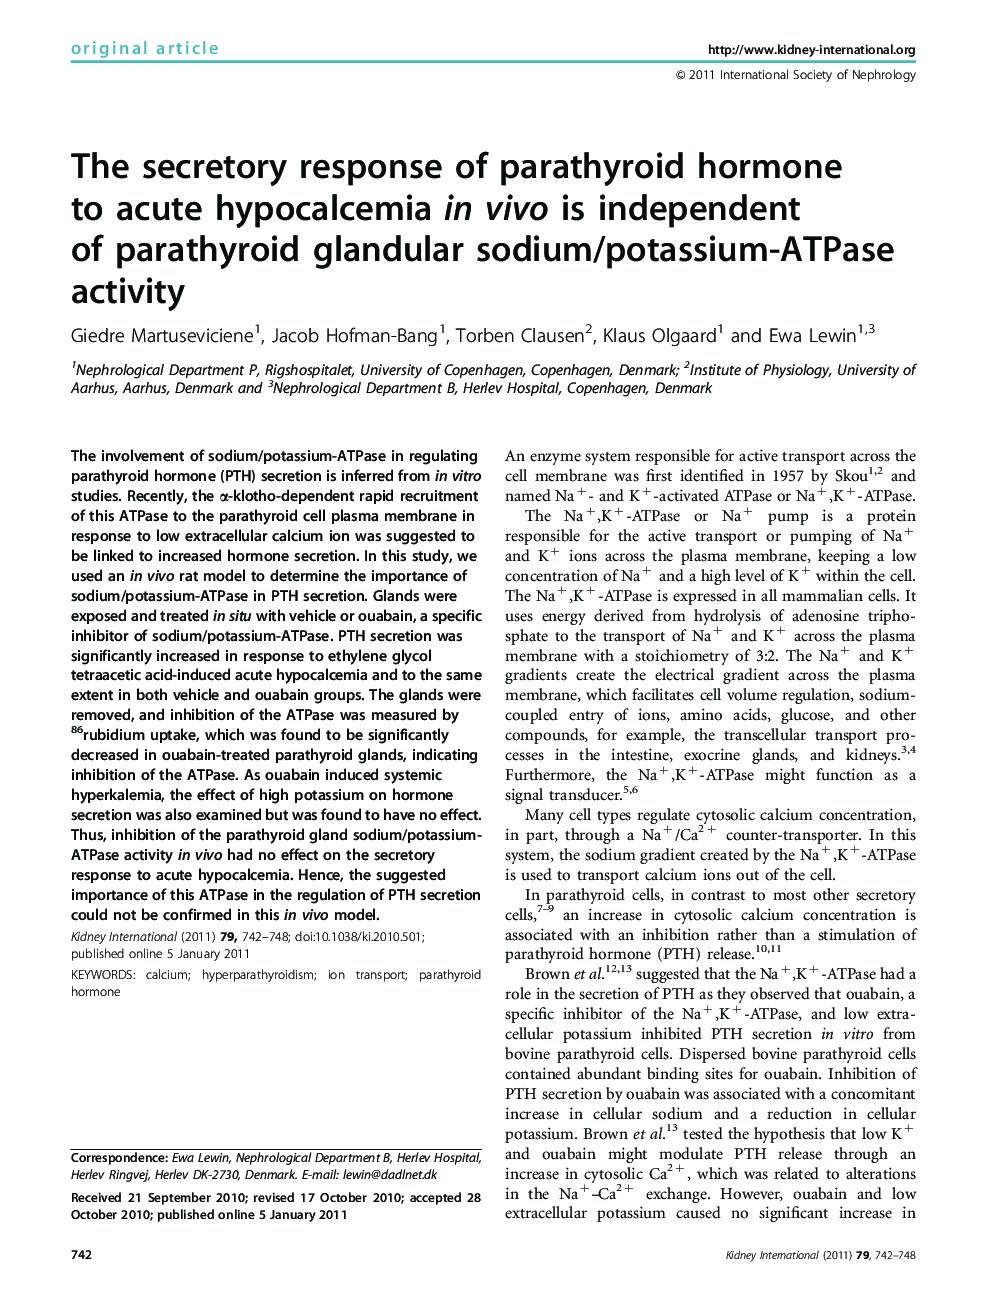 The secretory response of parathyroid hormone to acute hypocalcemia in vivo is independent of parathyroid glandular sodium/potassium-ATPase activity 